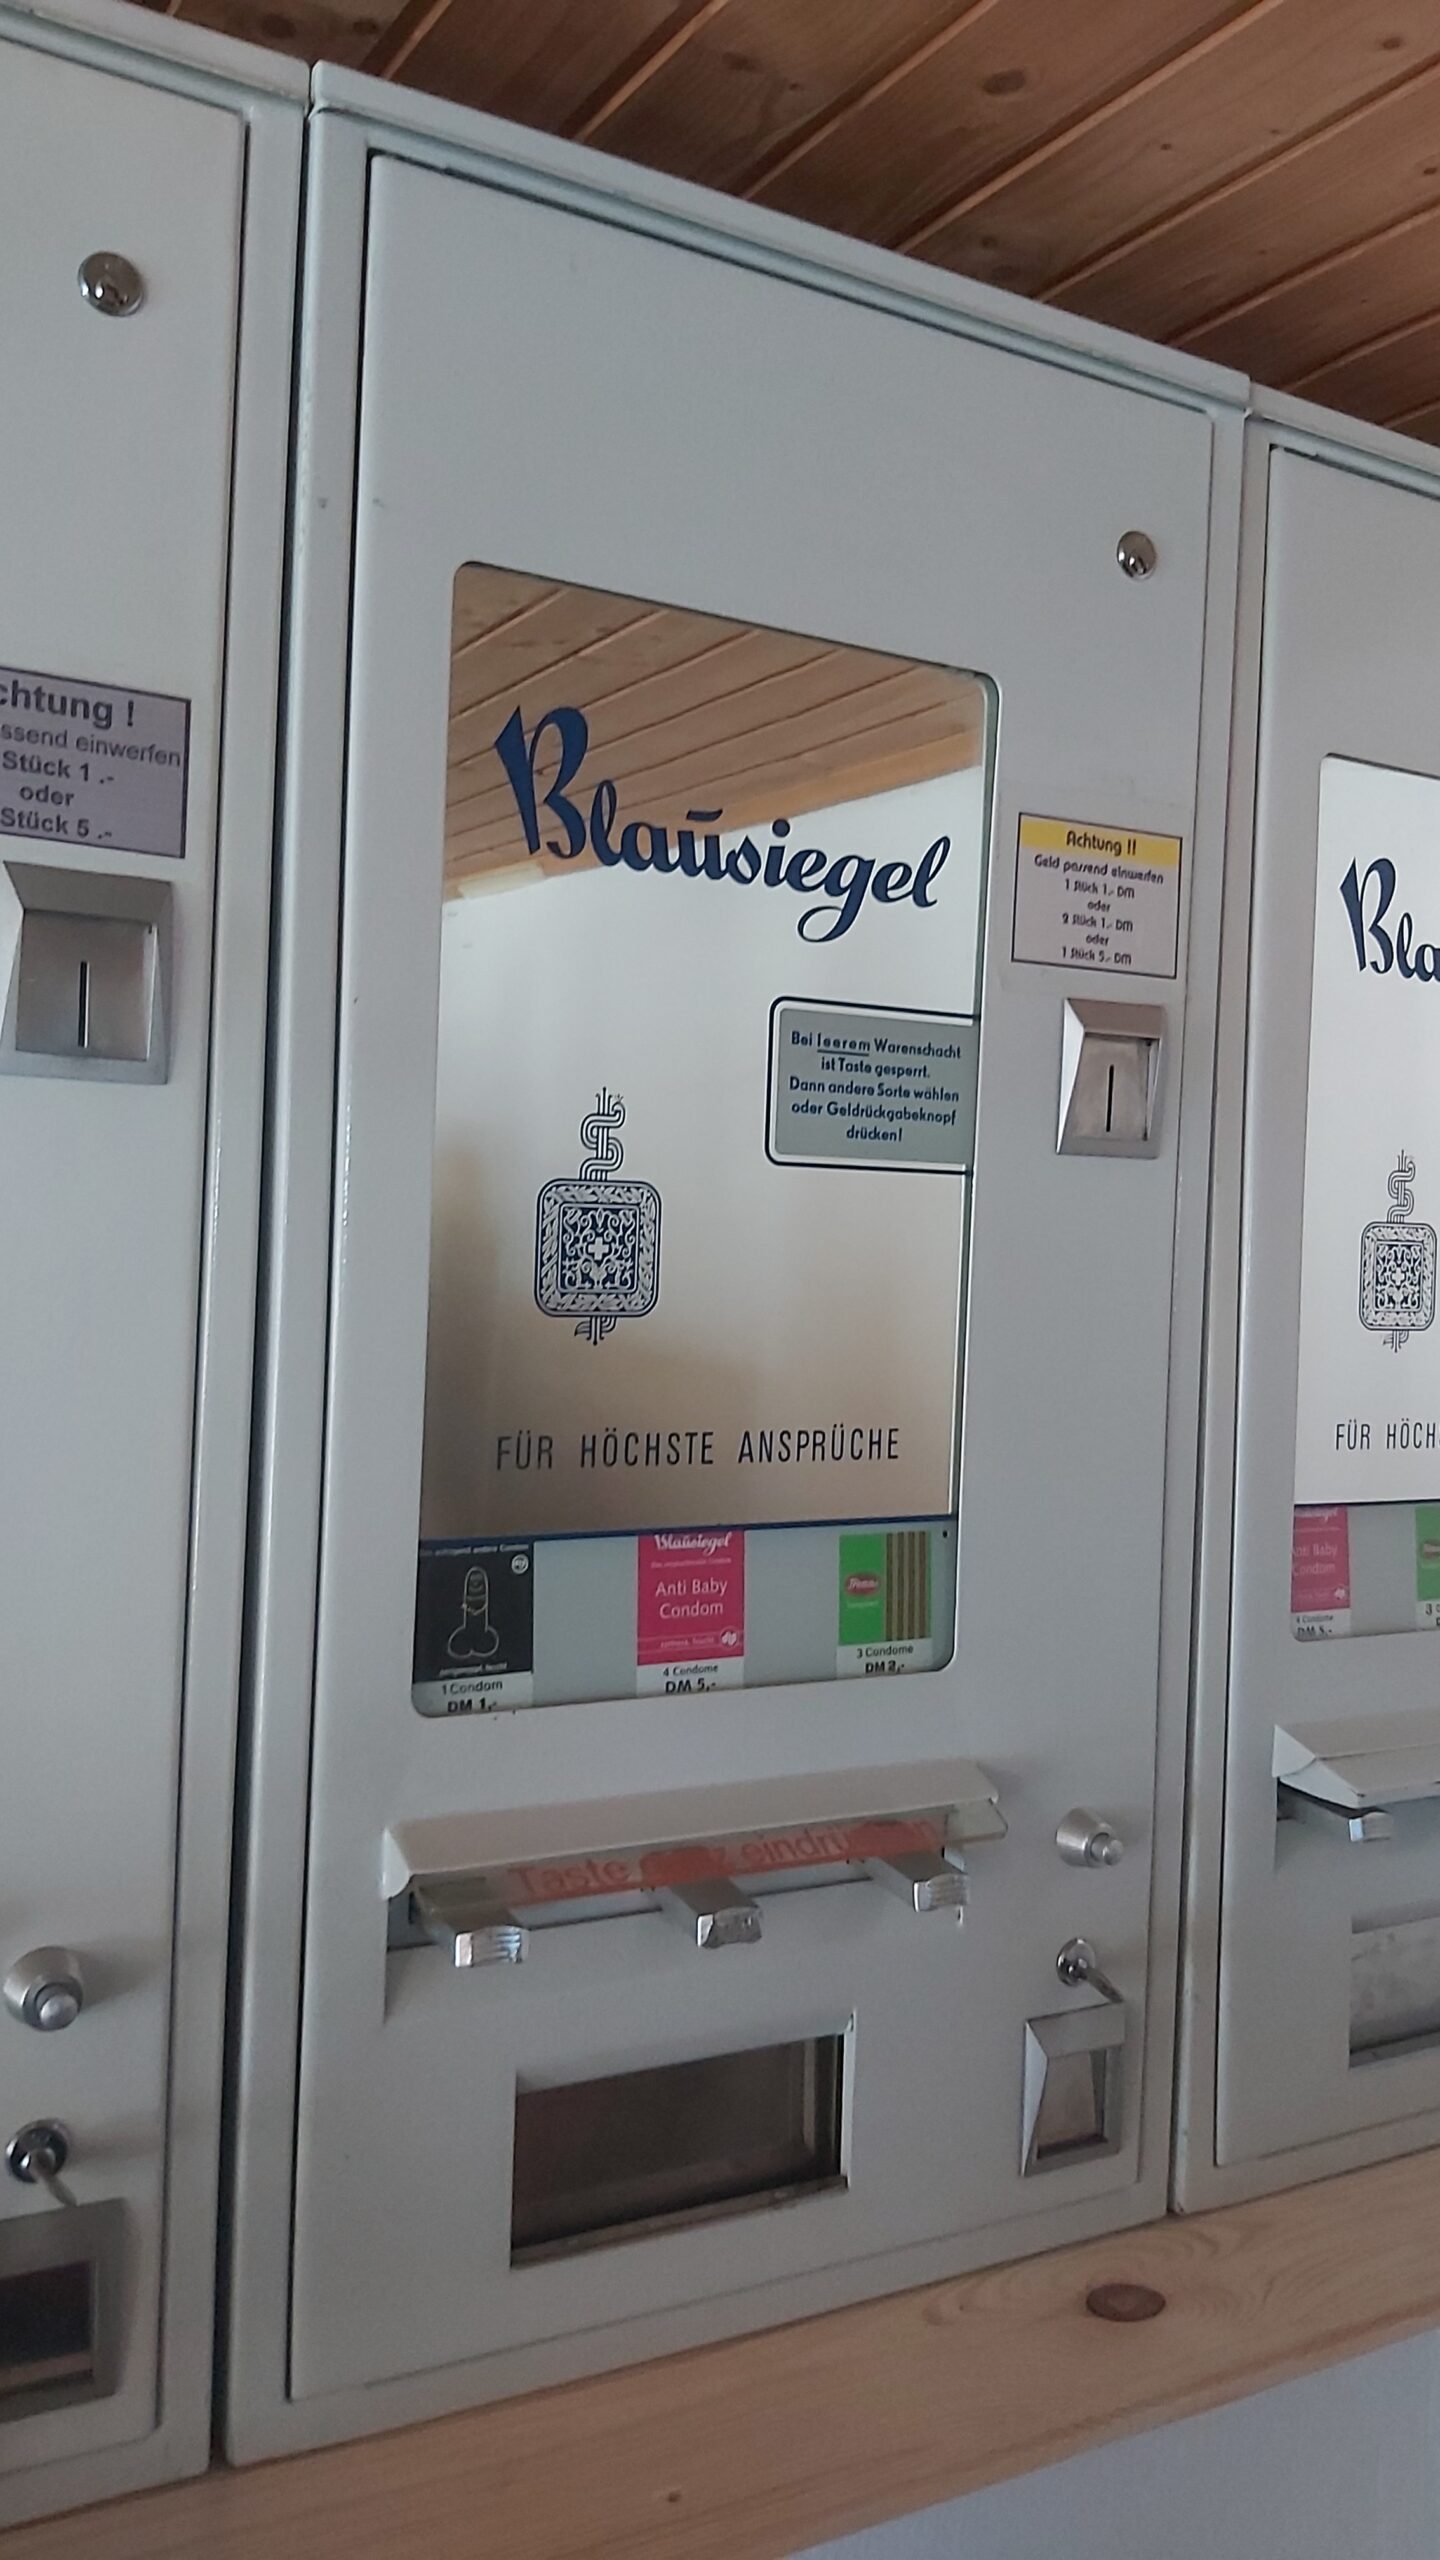 Kondomautomat 2 Schacht 1X2€ Einwurf